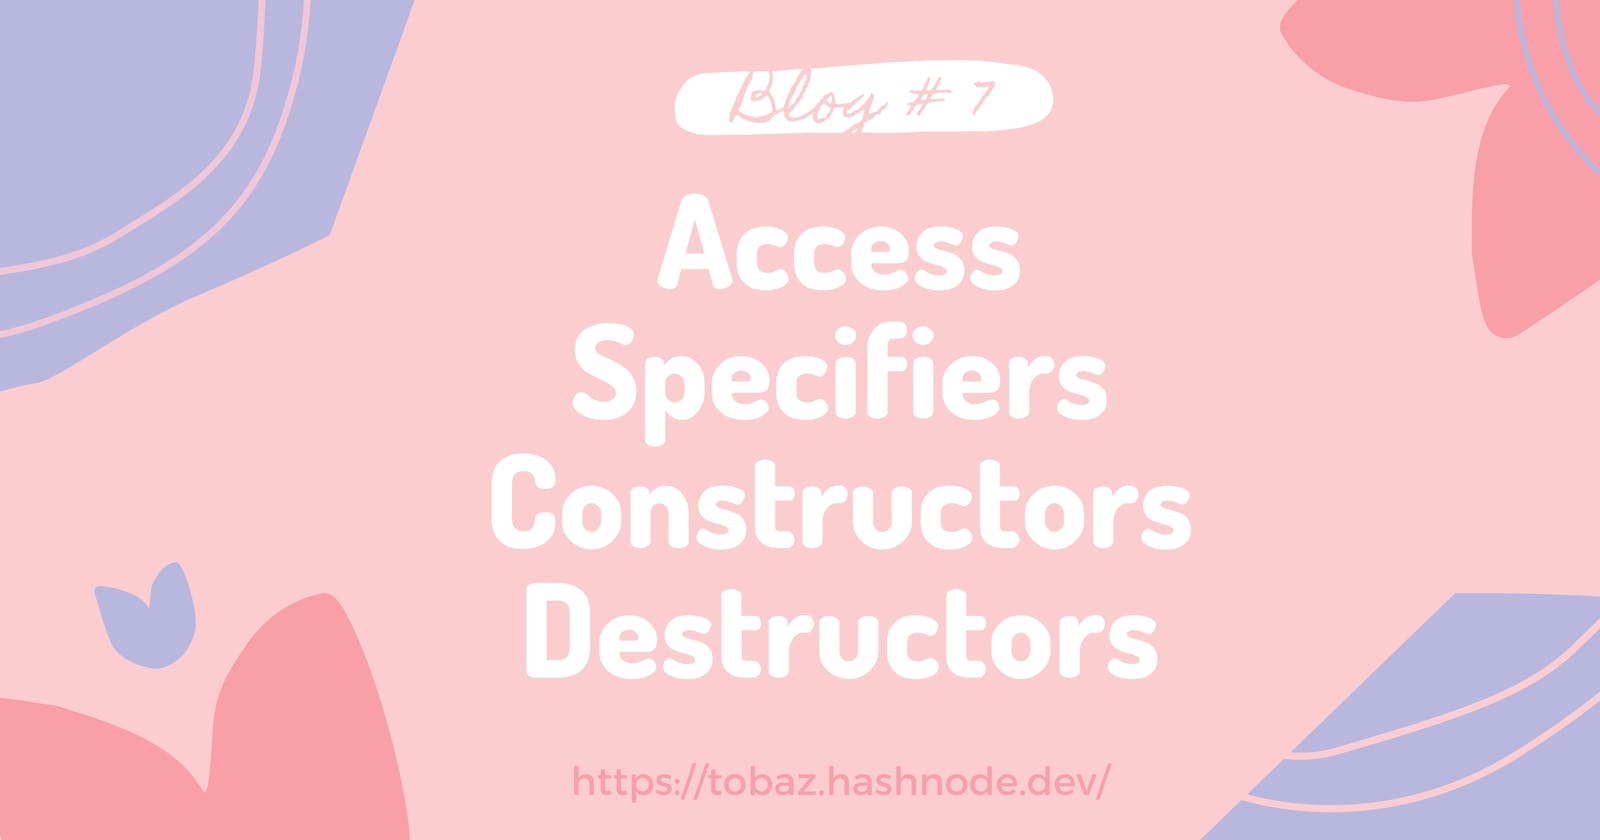 Access Specifiers, Constructors, and Destructors